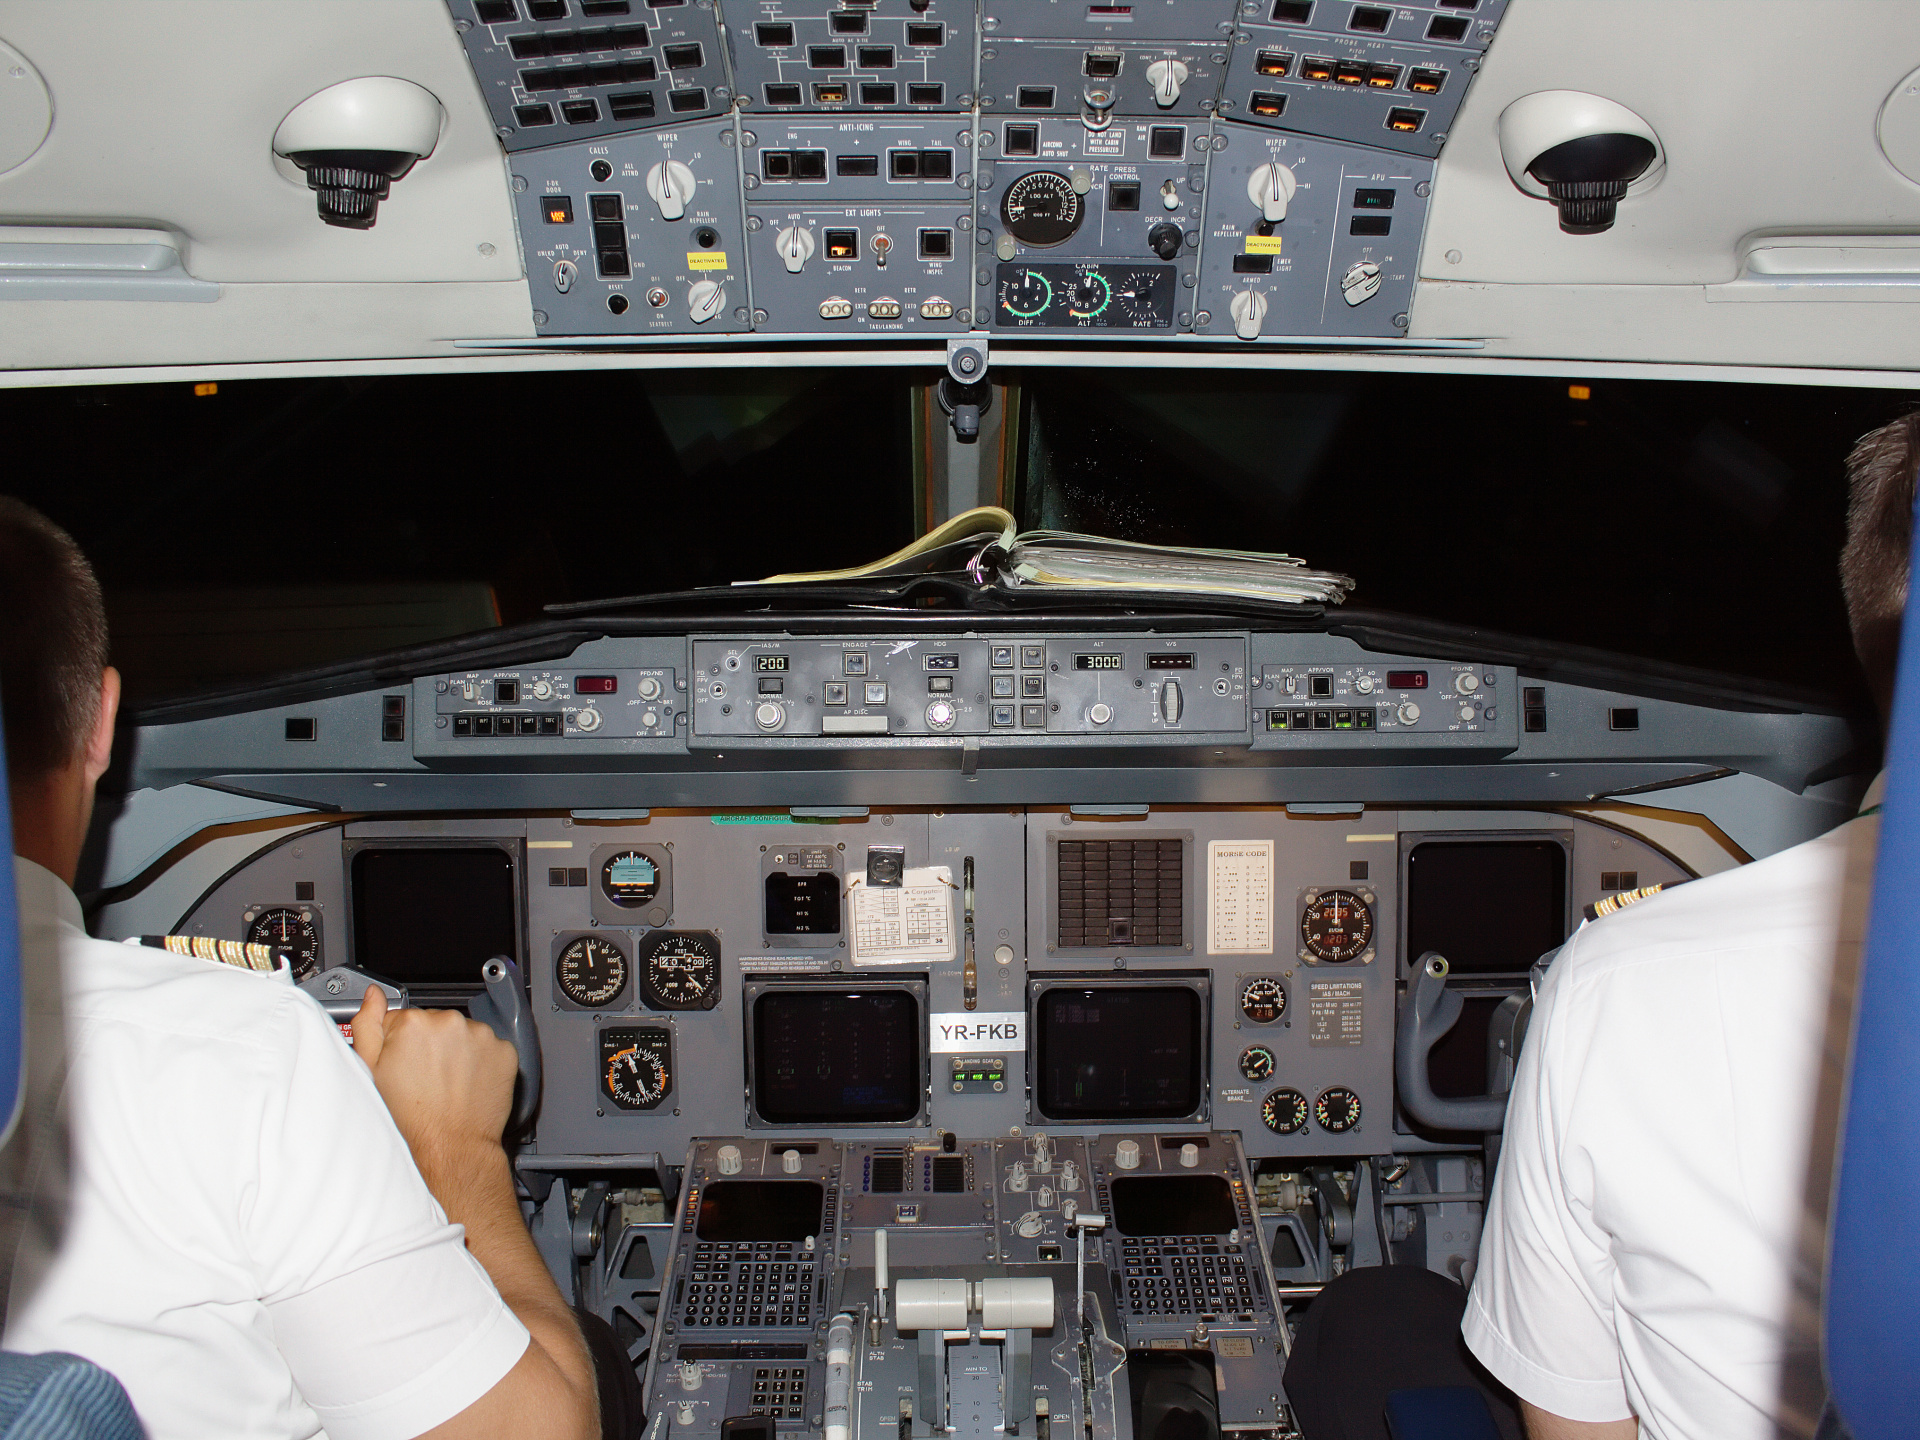 YR-FKB - cockpit (Aircraft » EPWA Spotting » Fokker 100 » Carpatair)